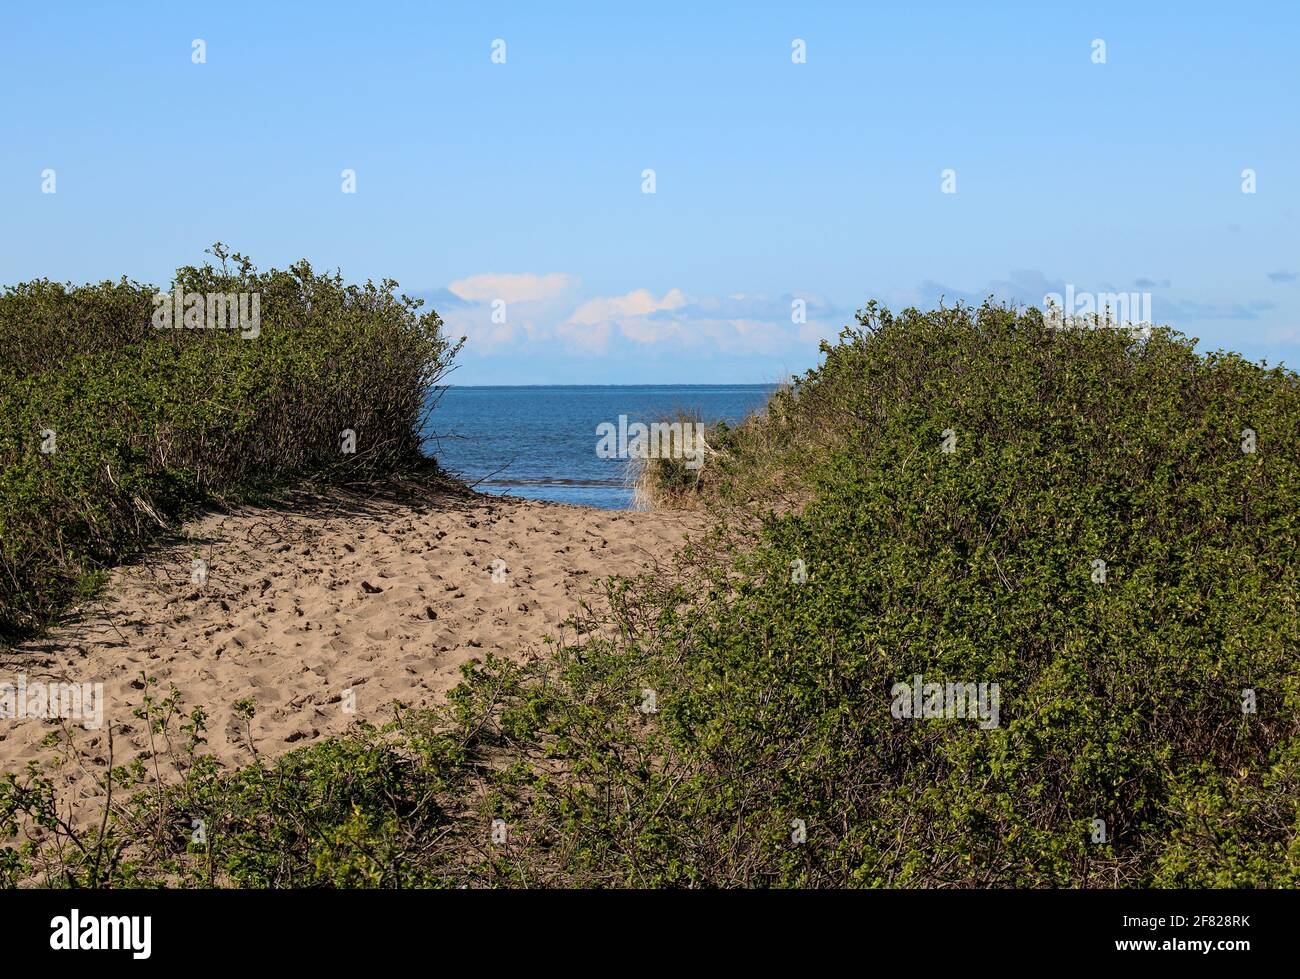 Pathway through coastal vegetation to sandy beach Stock Photo